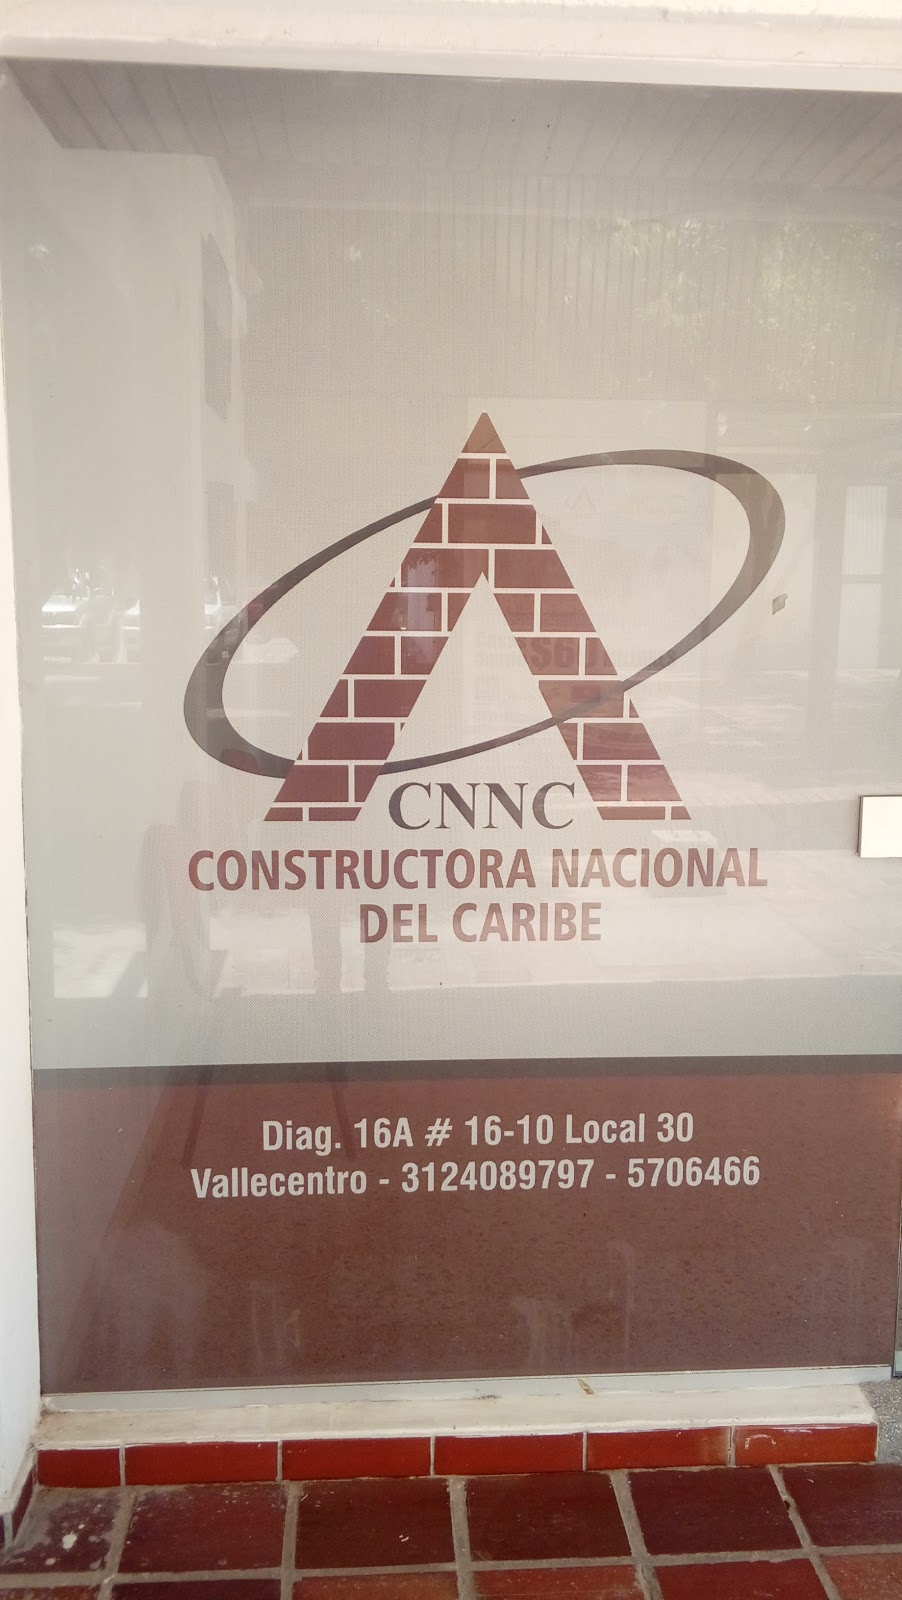 Constructora Nacional del Caribe